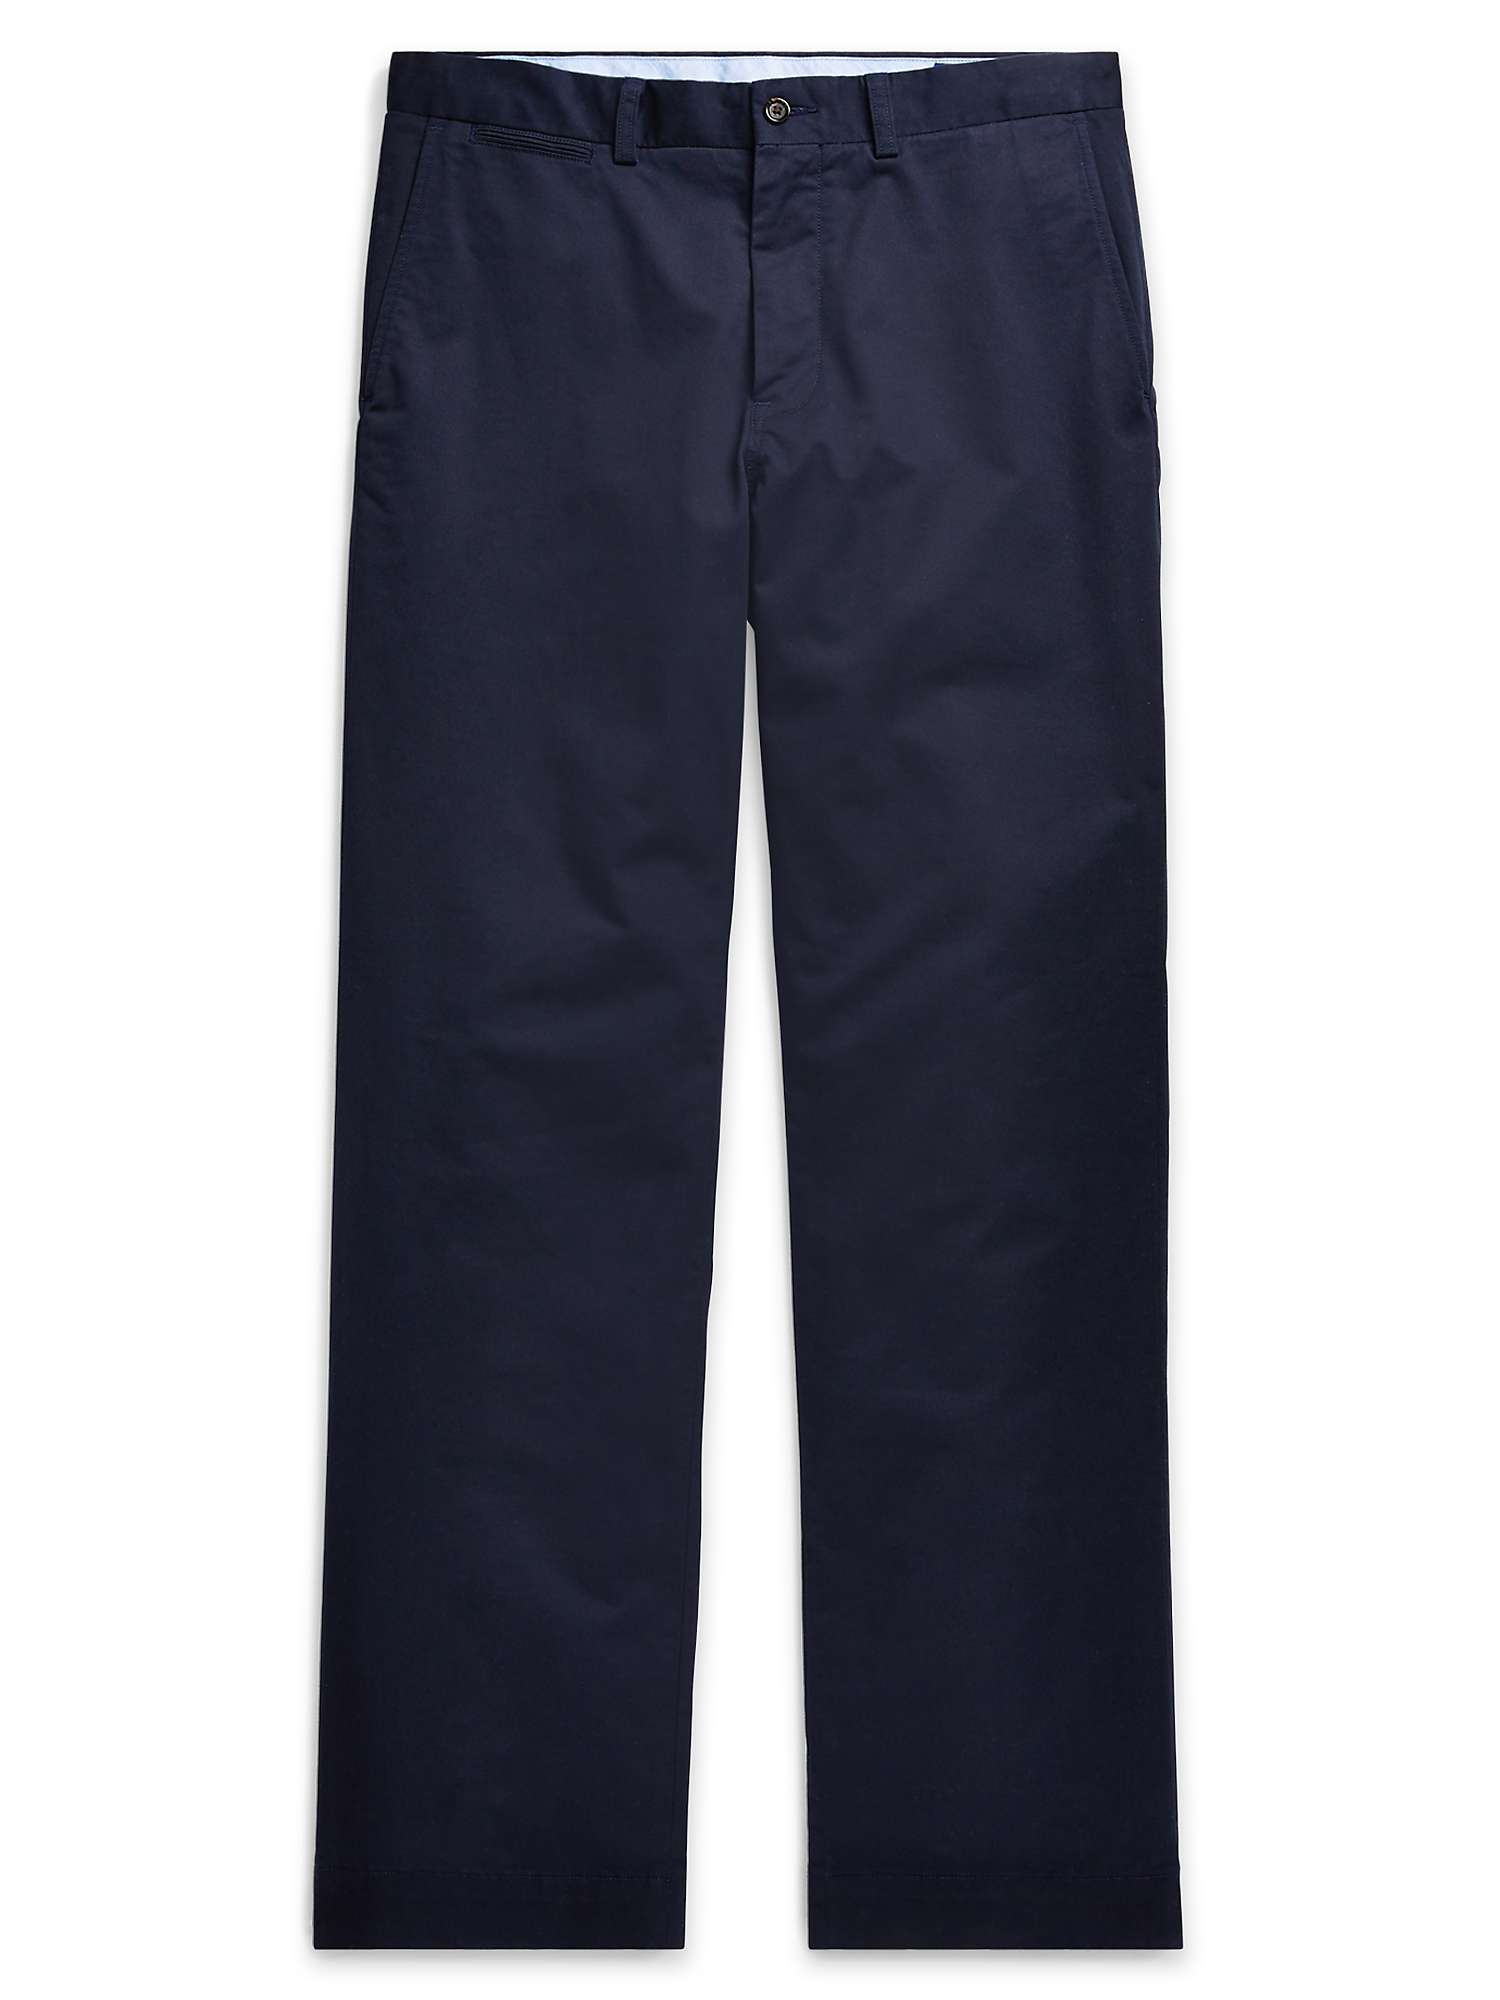 Buy Polo Ralph Lauren Flat Pant Trousers Online at johnlewis.com